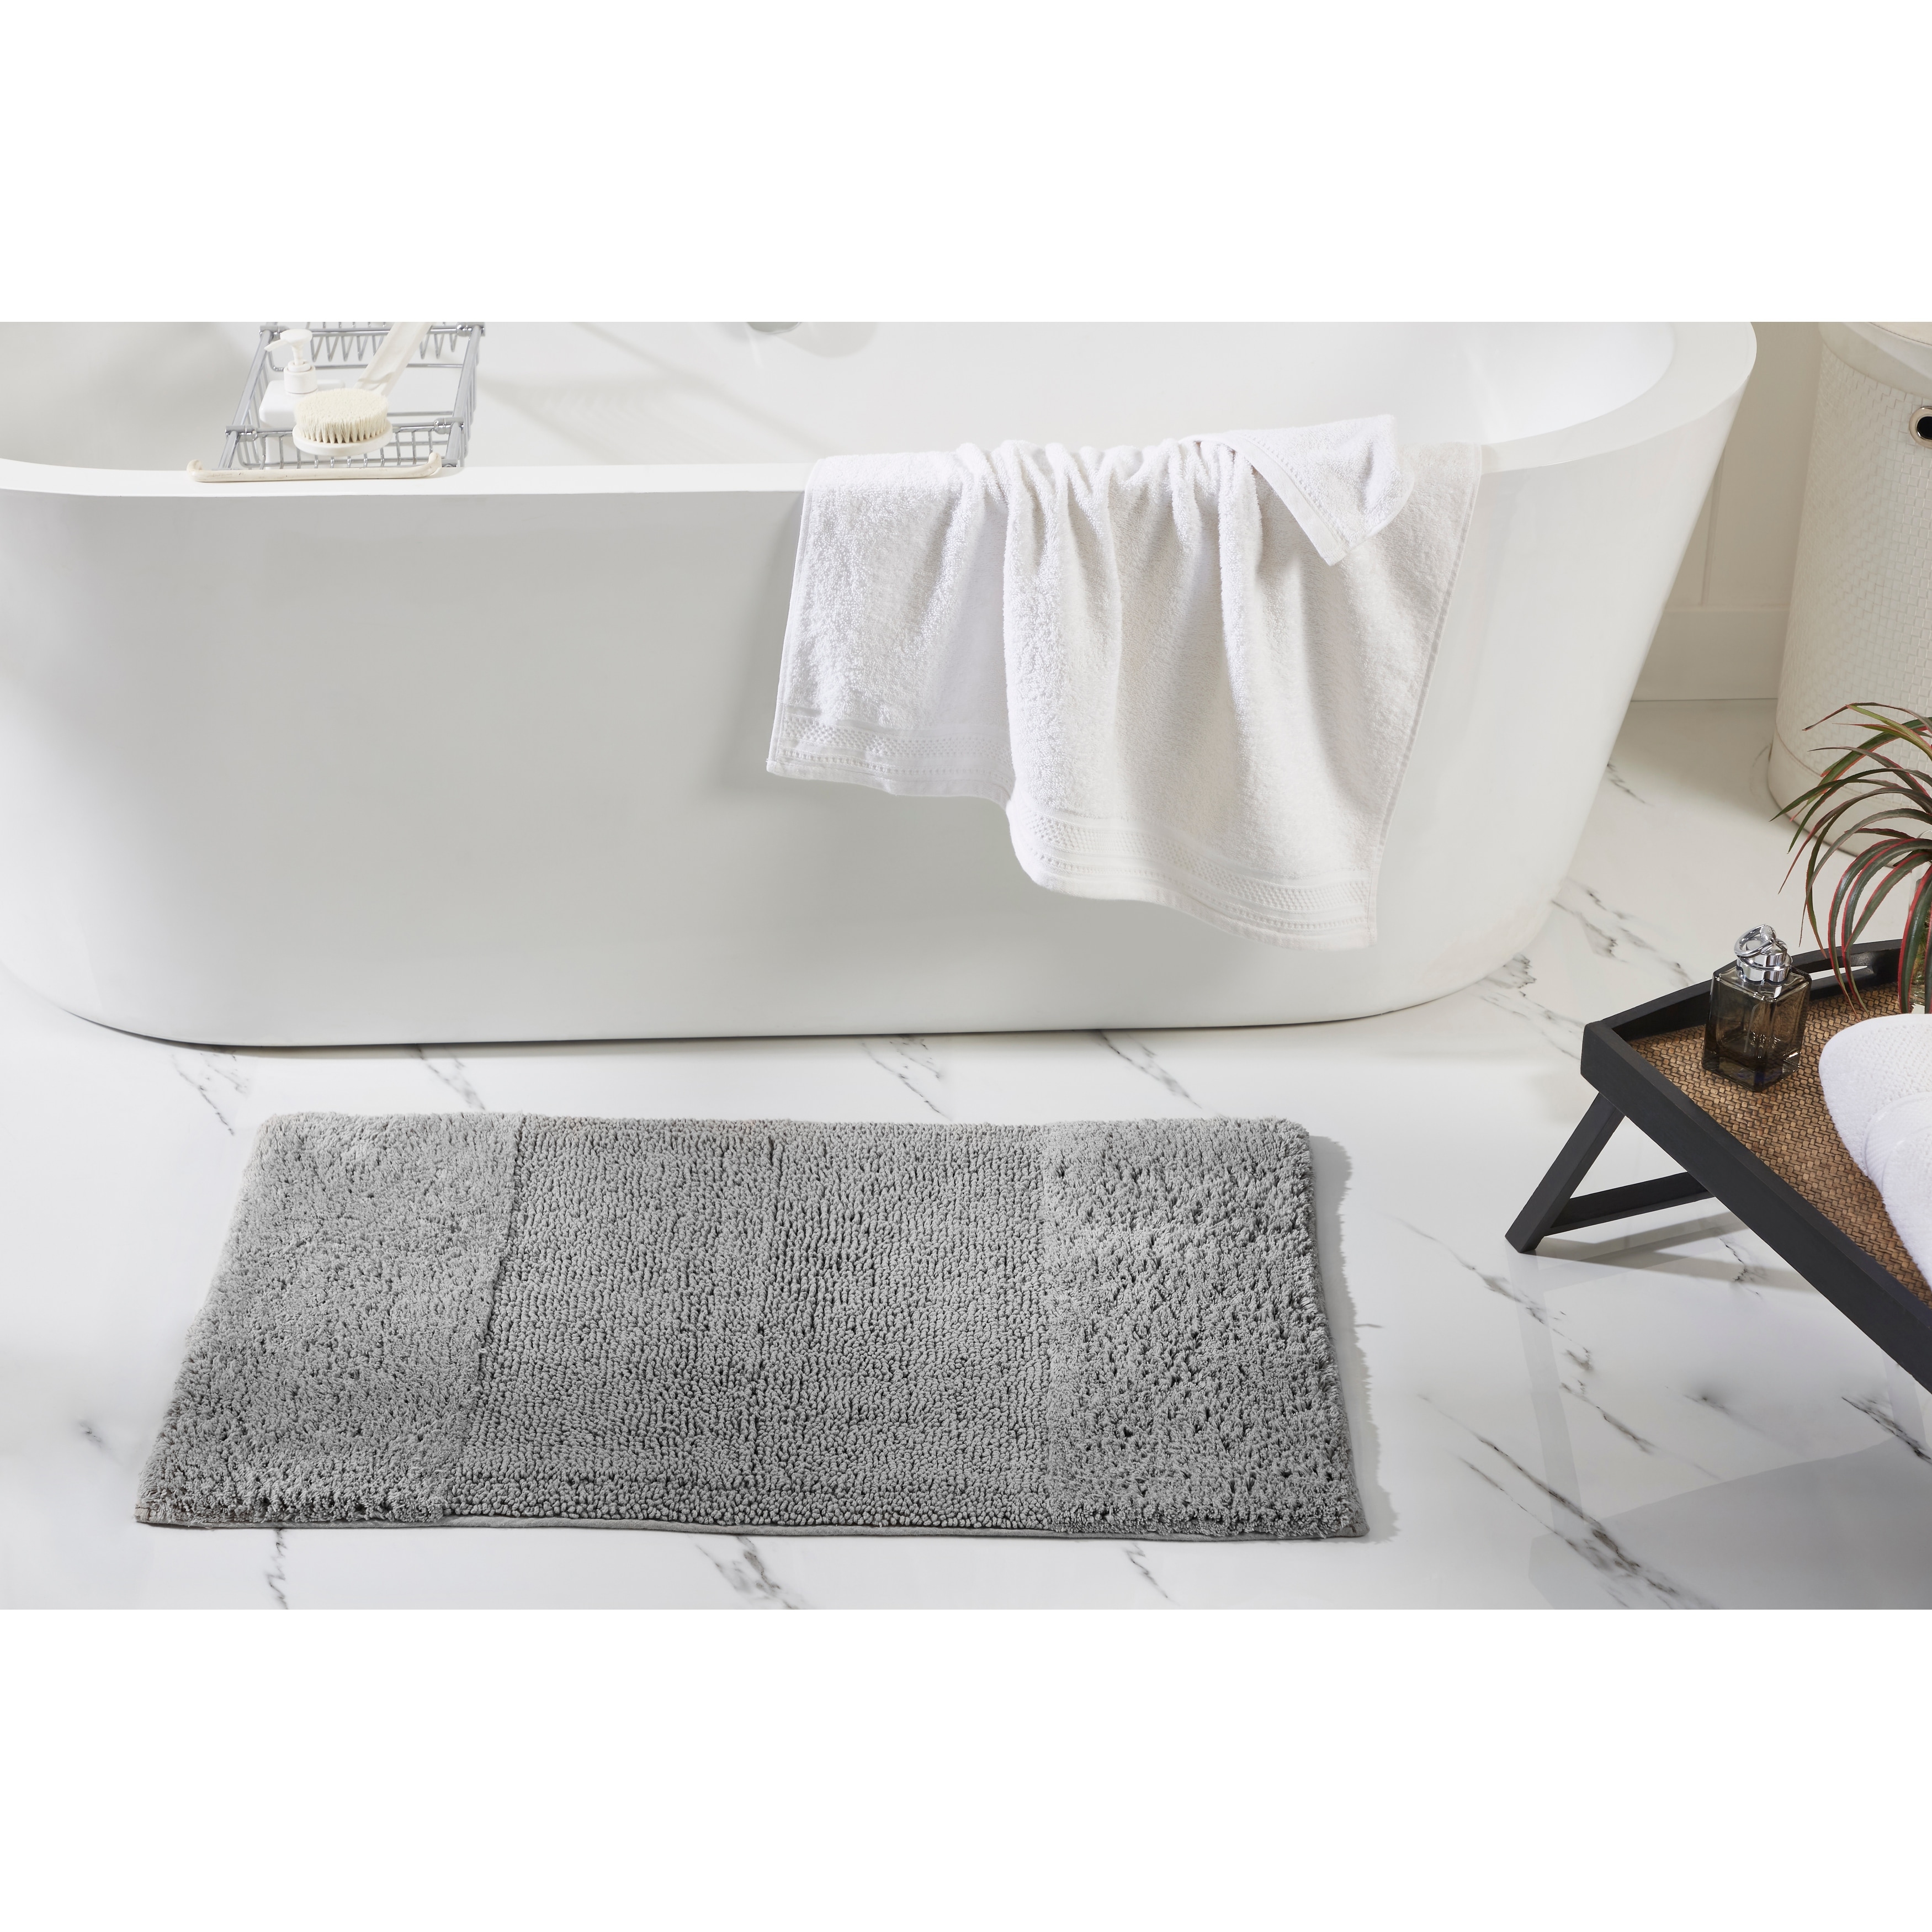 High End Luxury Bath Mats, Rugs & Sets, Luxury Bath Towels